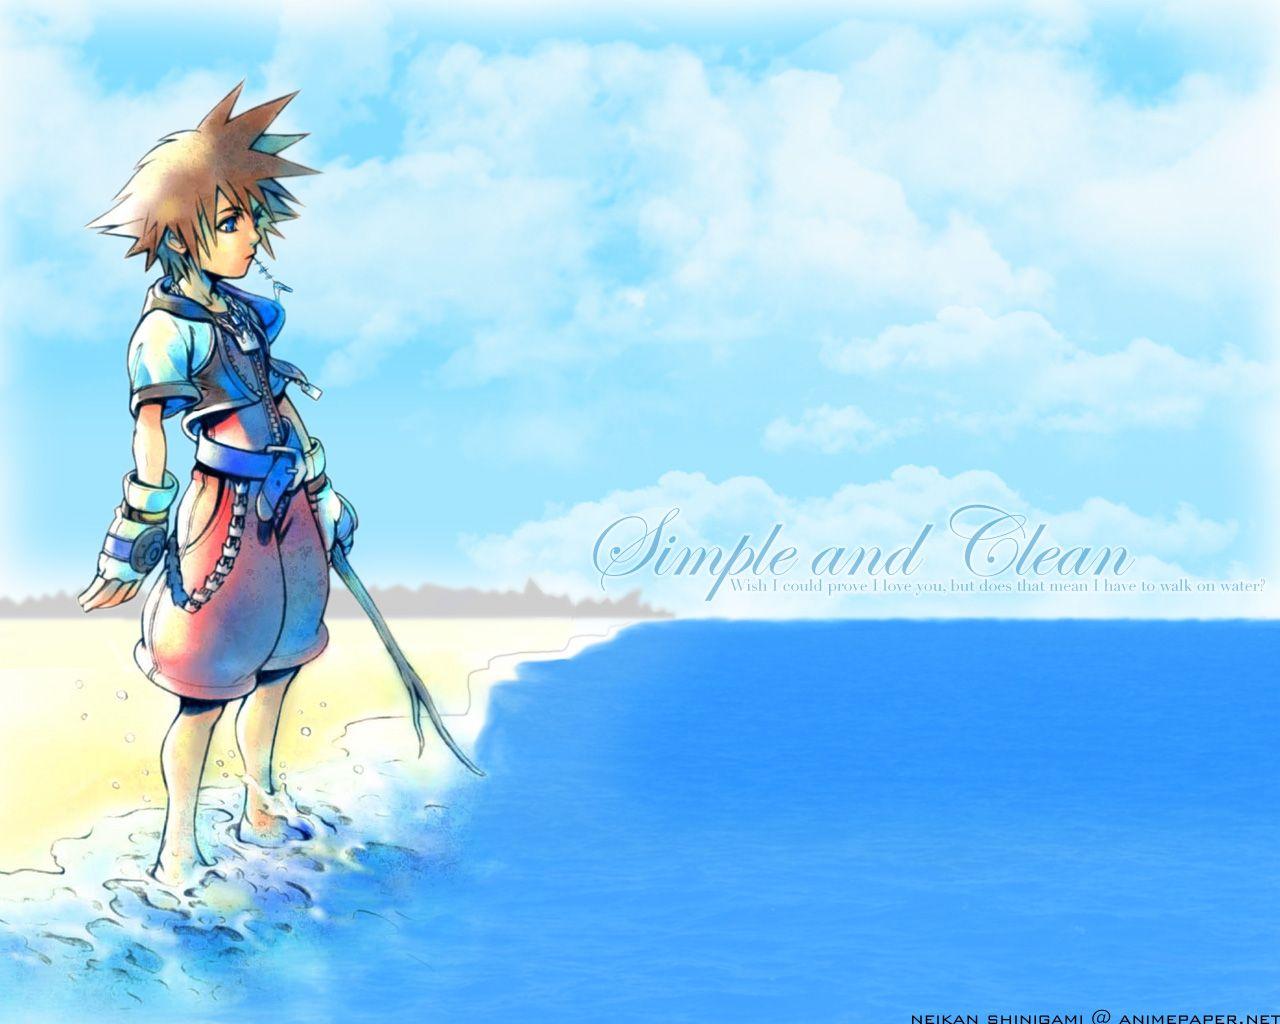 Kingdom Hearts Sora Wallpapers Top Free Kingdom Hearts Sora Backgrounds Wallpaperaccess